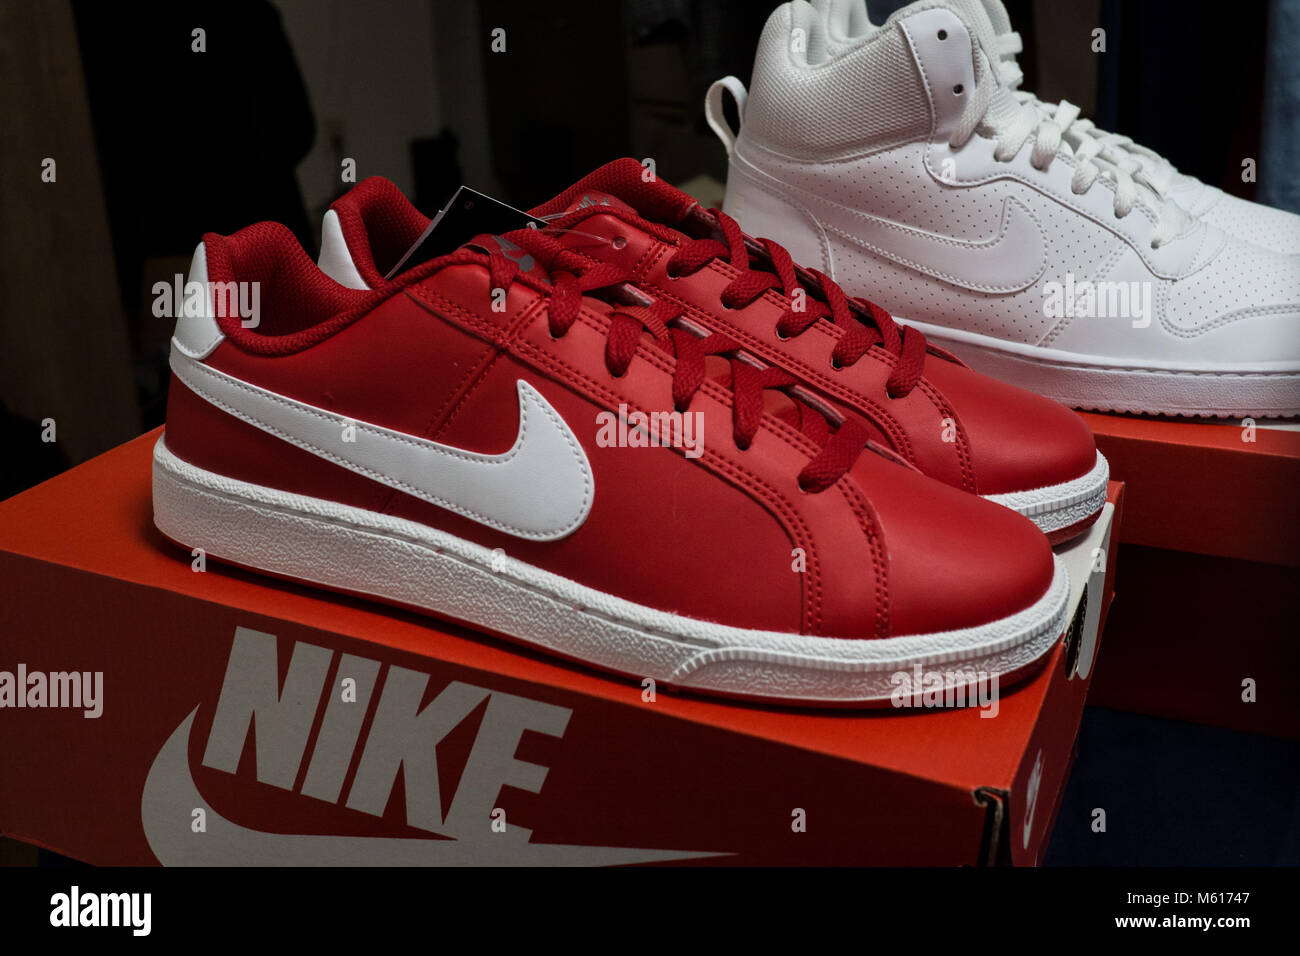 Neue Nike Schuhe frisch aus der Box. Rot Nike Wanderer, Weiß Nike Hi Tops  Stockfotografie - Alamy